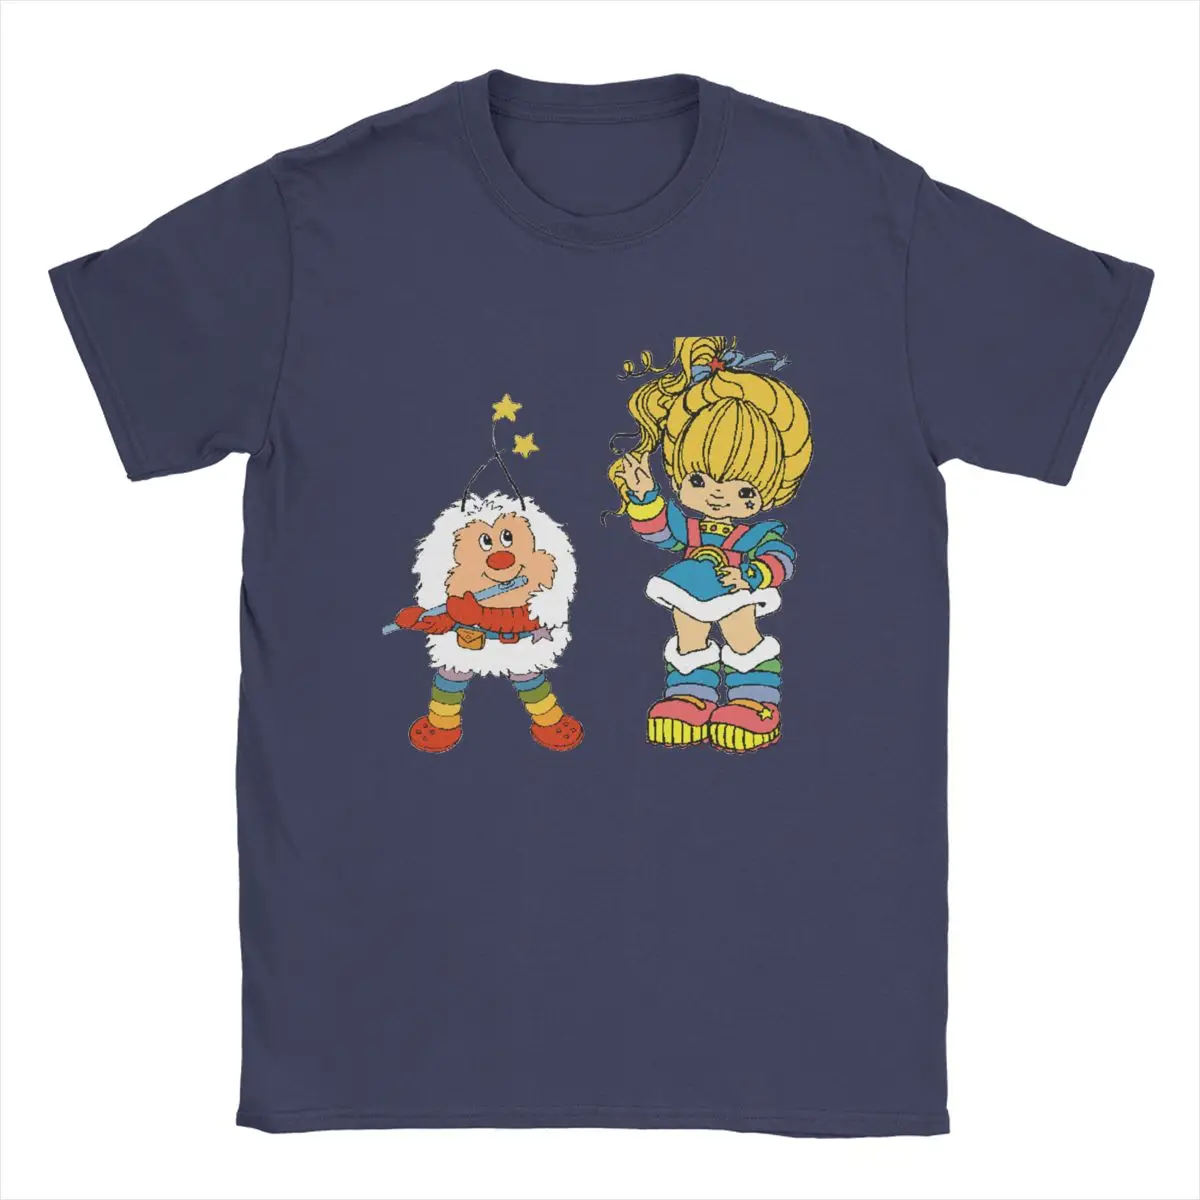 

Crazy Rainbow Brite For Lover Kids Since 80s T-Shirts for Men Women 100% Cotton T Shirt Cartoon Short Sleeve Tee Shirt Big Size